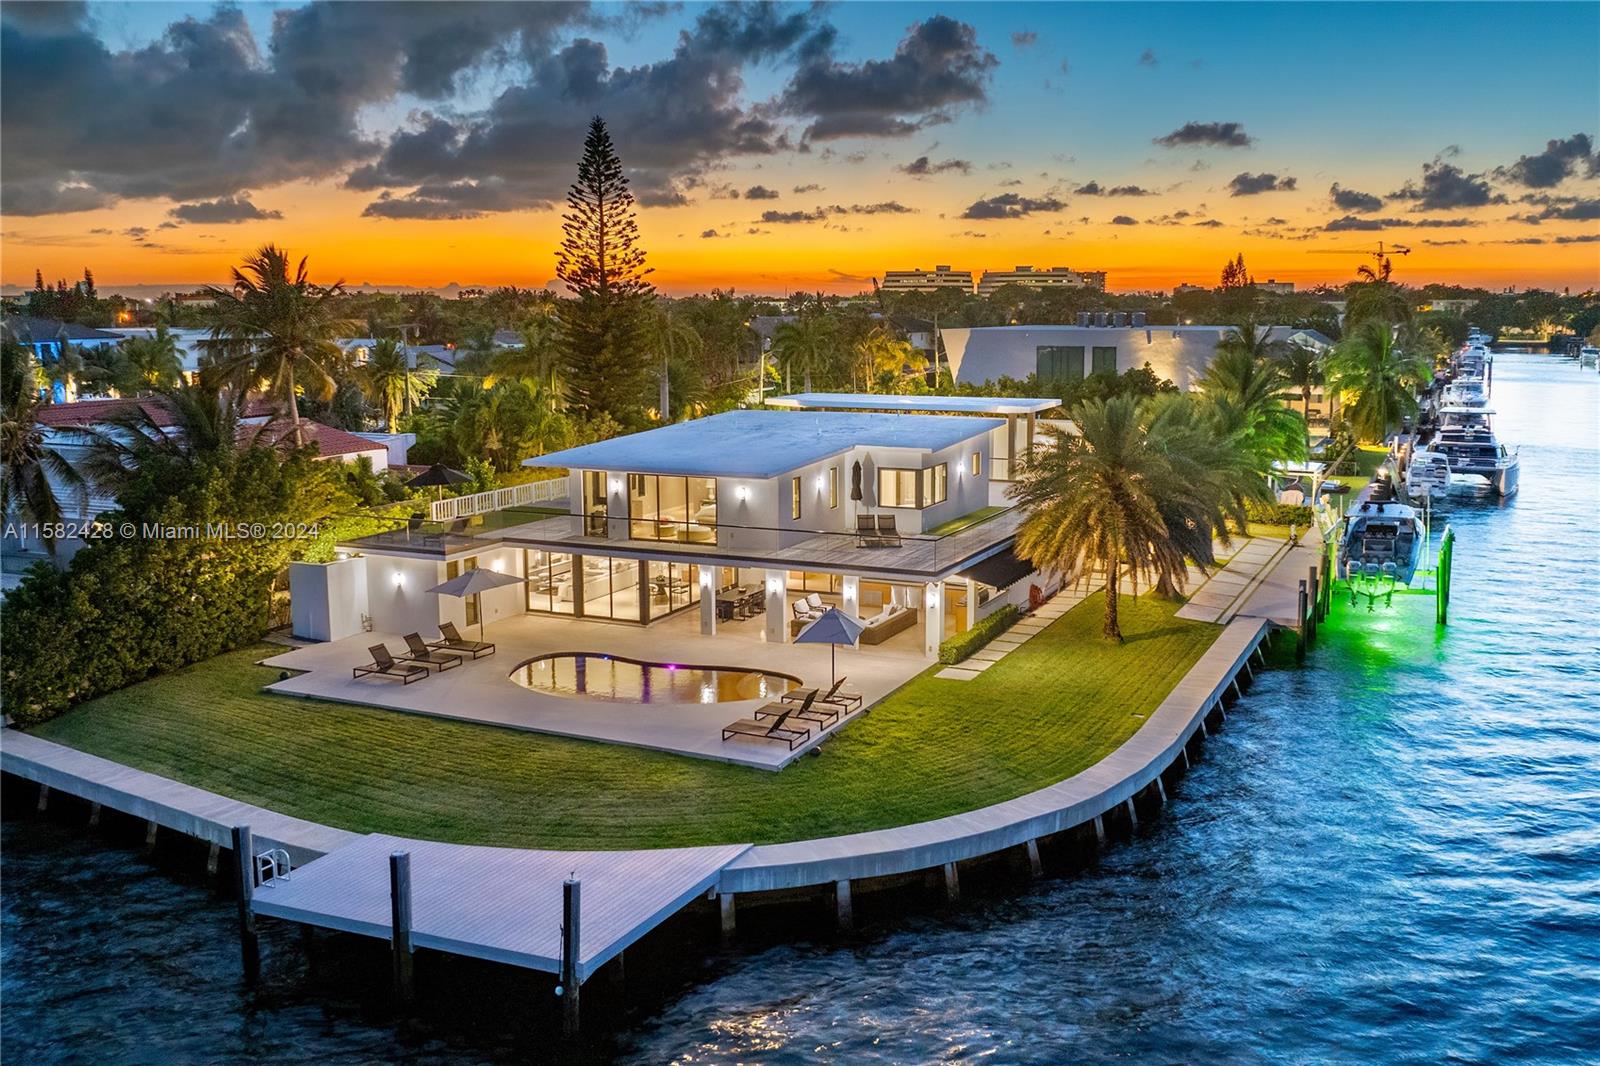 Property for Sale at 1995 Ne 118th Rd, North Miami, Miami-Dade County, Florida - Bedrooms: 6 
Bathrooms: 7  - $12,995,000